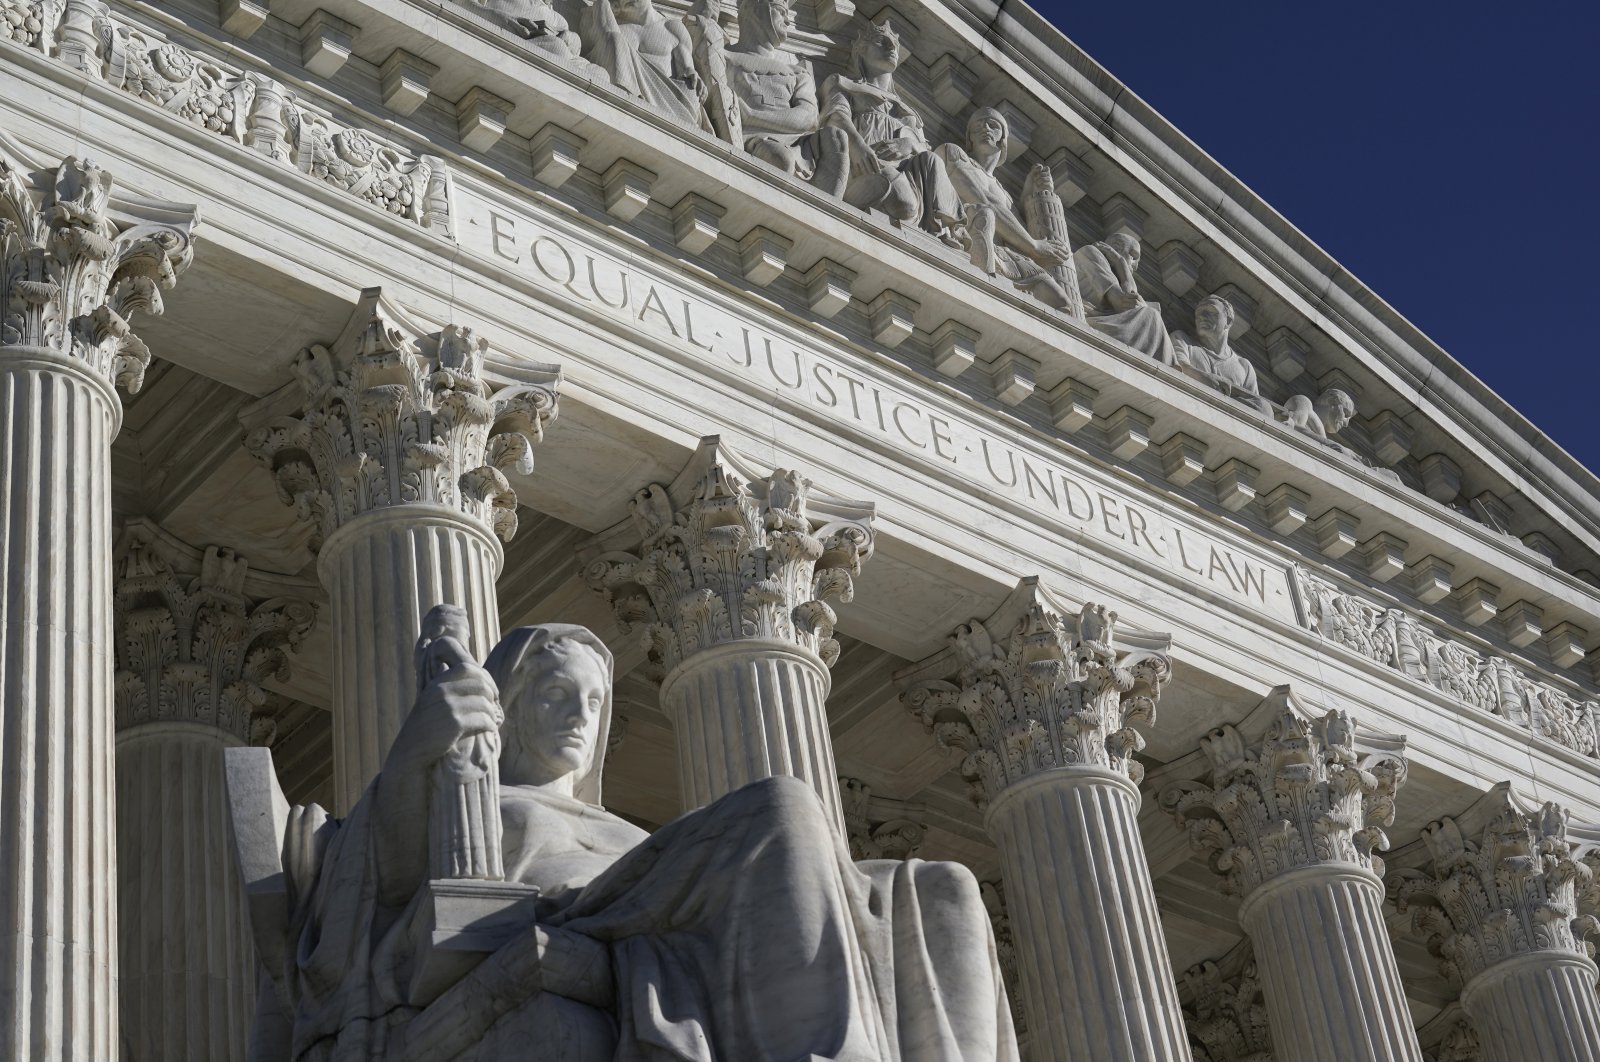 The Supreme Court is seen in Washington D.C., U.S. on Nov. 4, 2020. (AP Photo)